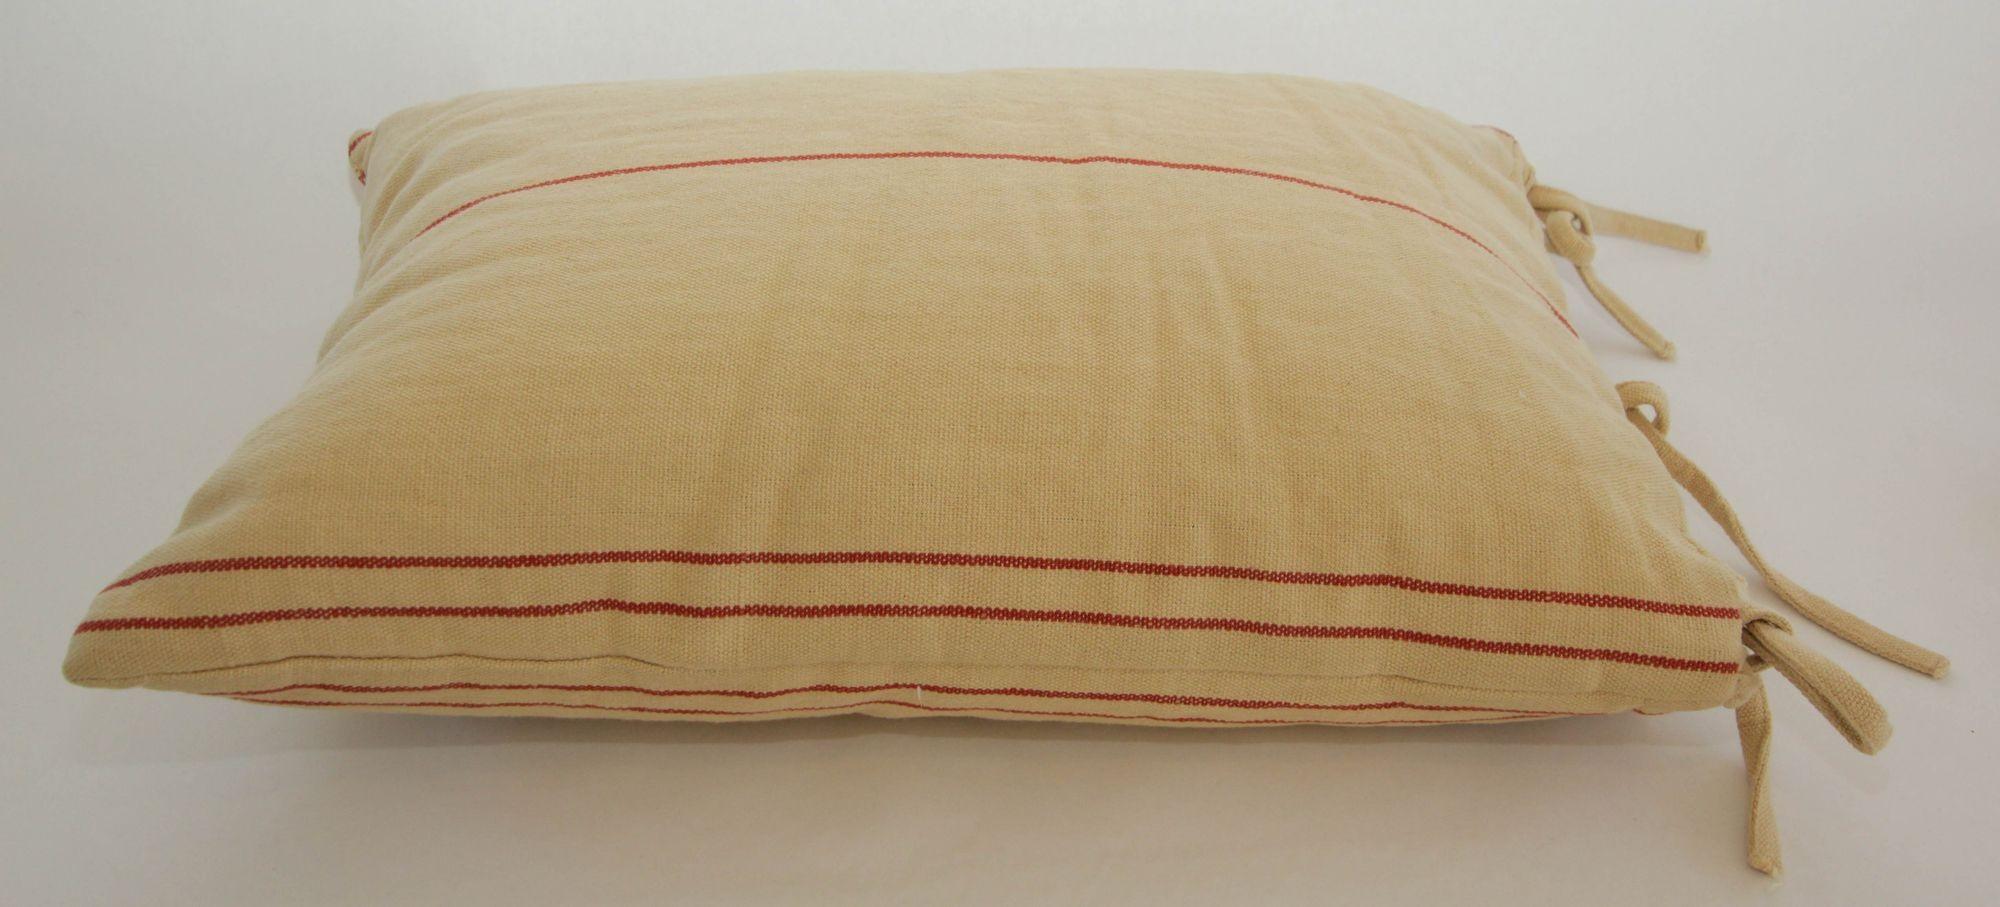 Ralph Lauren Lumbar Pillow Rectangular Shape Country French Grain Sack For Sale 2